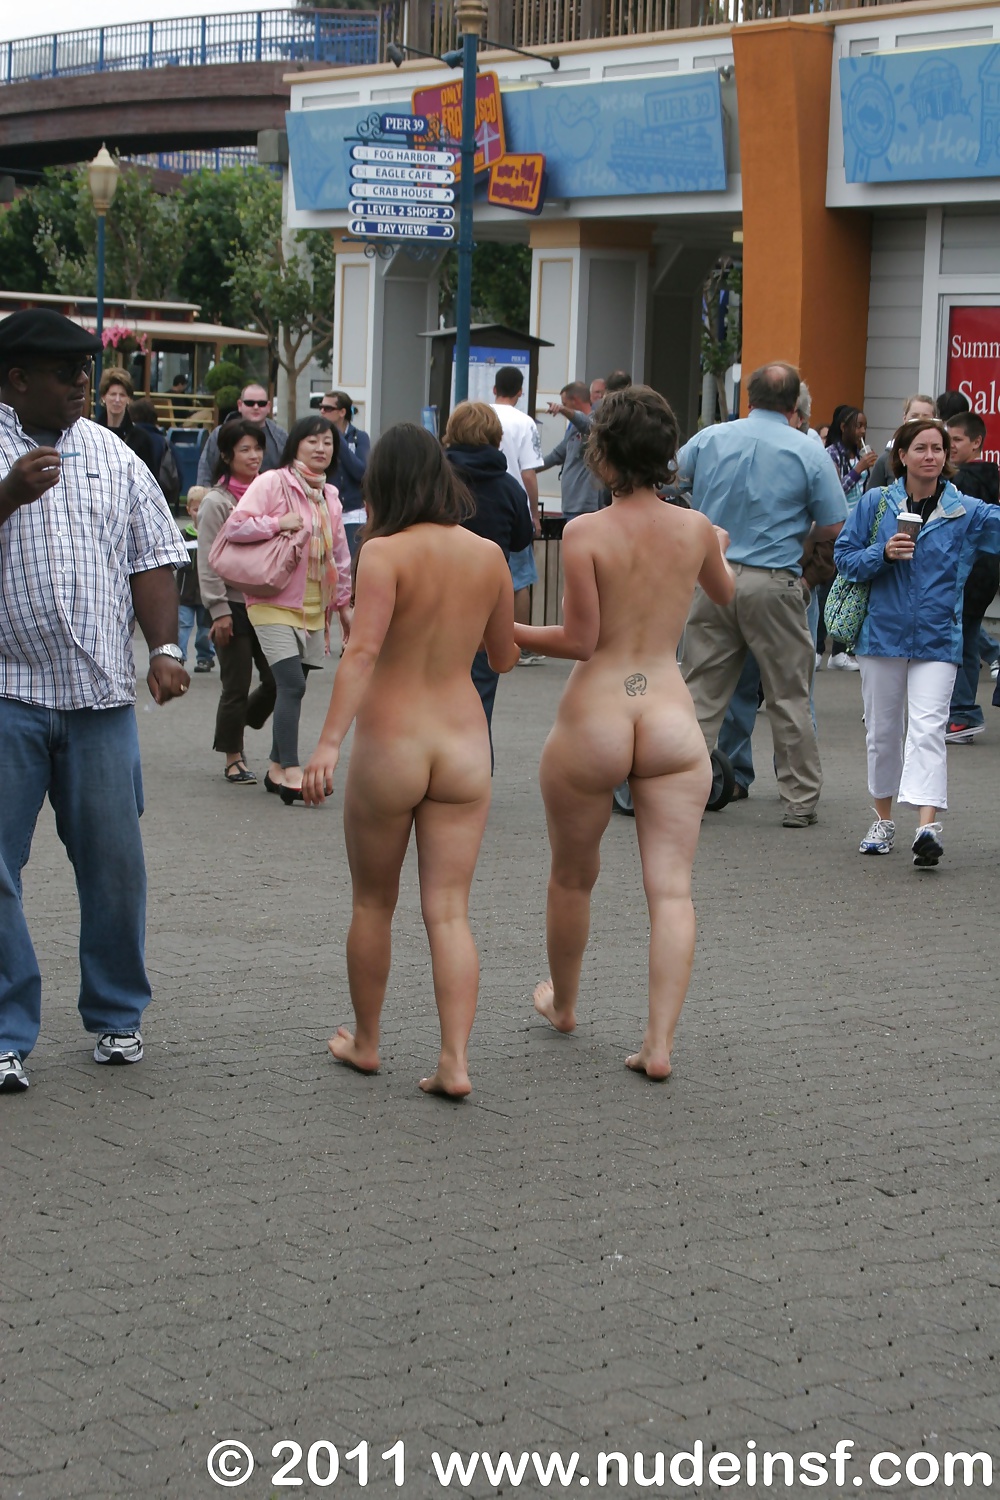 Free candid voyeur amateur flashing upskirt public nudity photos